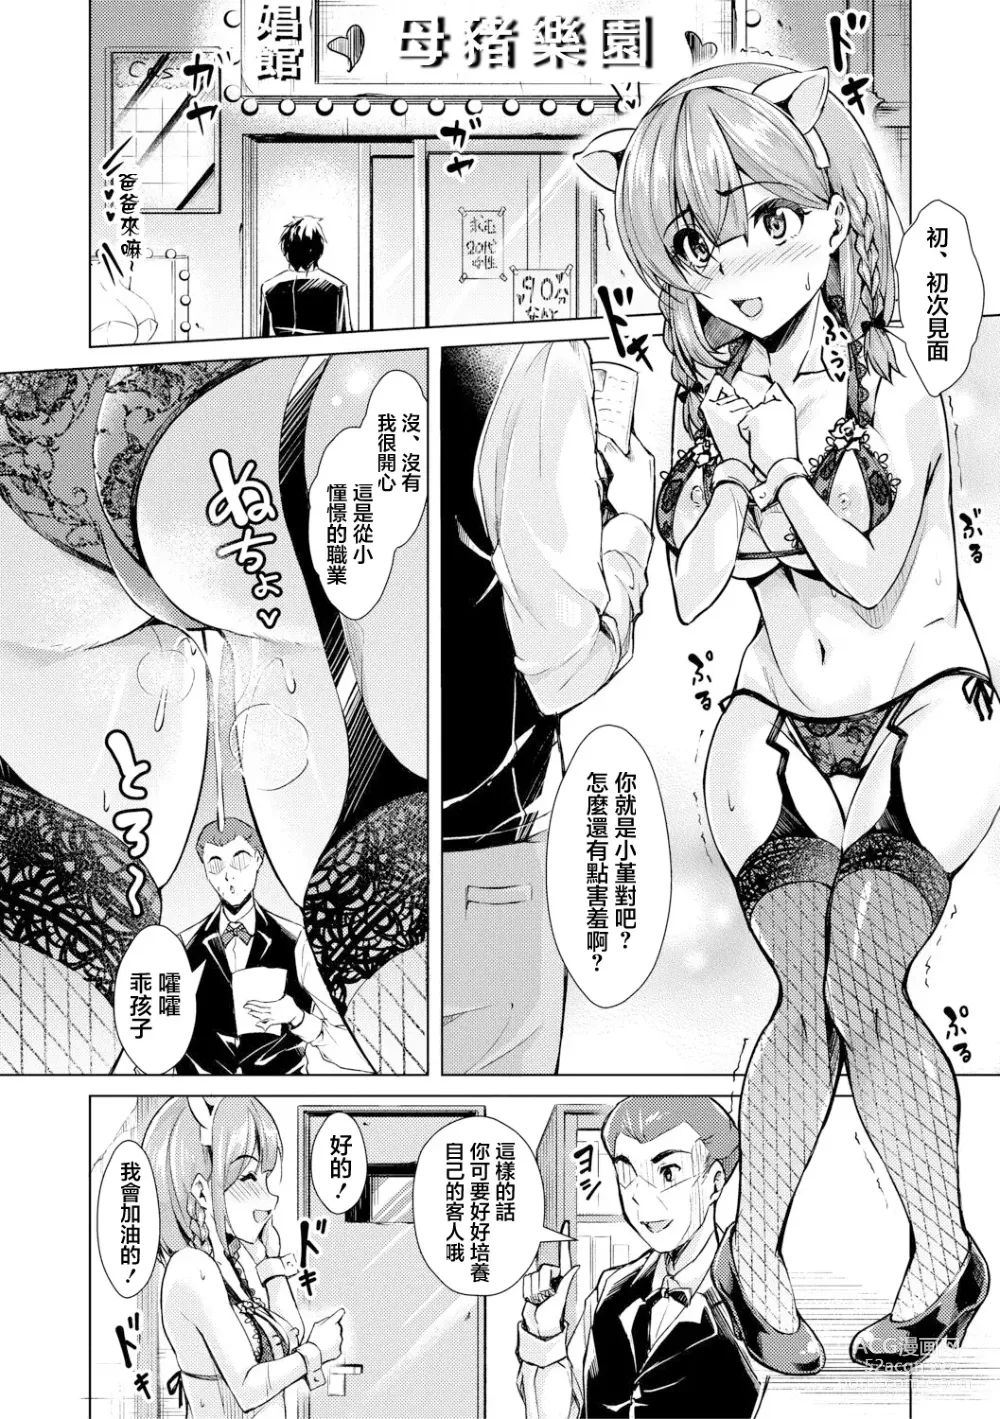 Page 4 of manga Shoufu Taiken Jisshuu